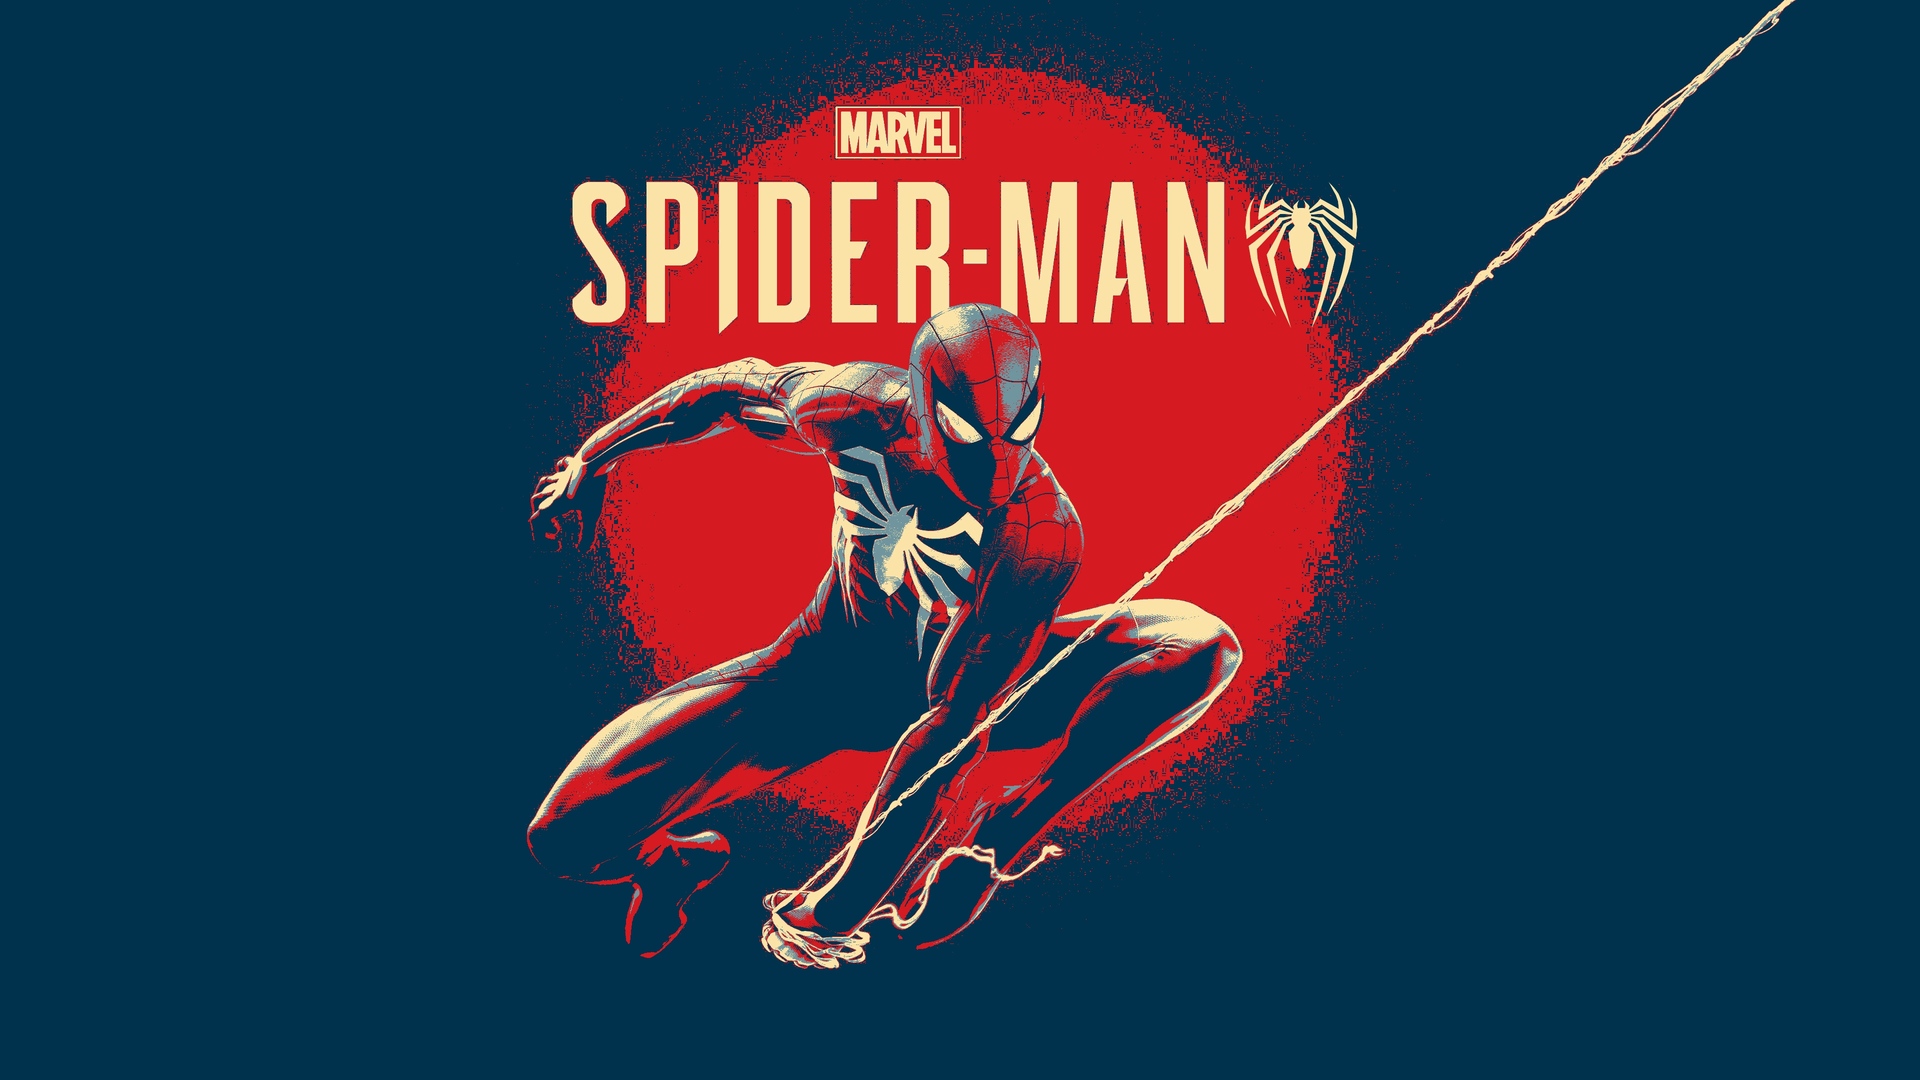 Marvel's Spider-Man Wallpaper – PS4Wallpapers.com